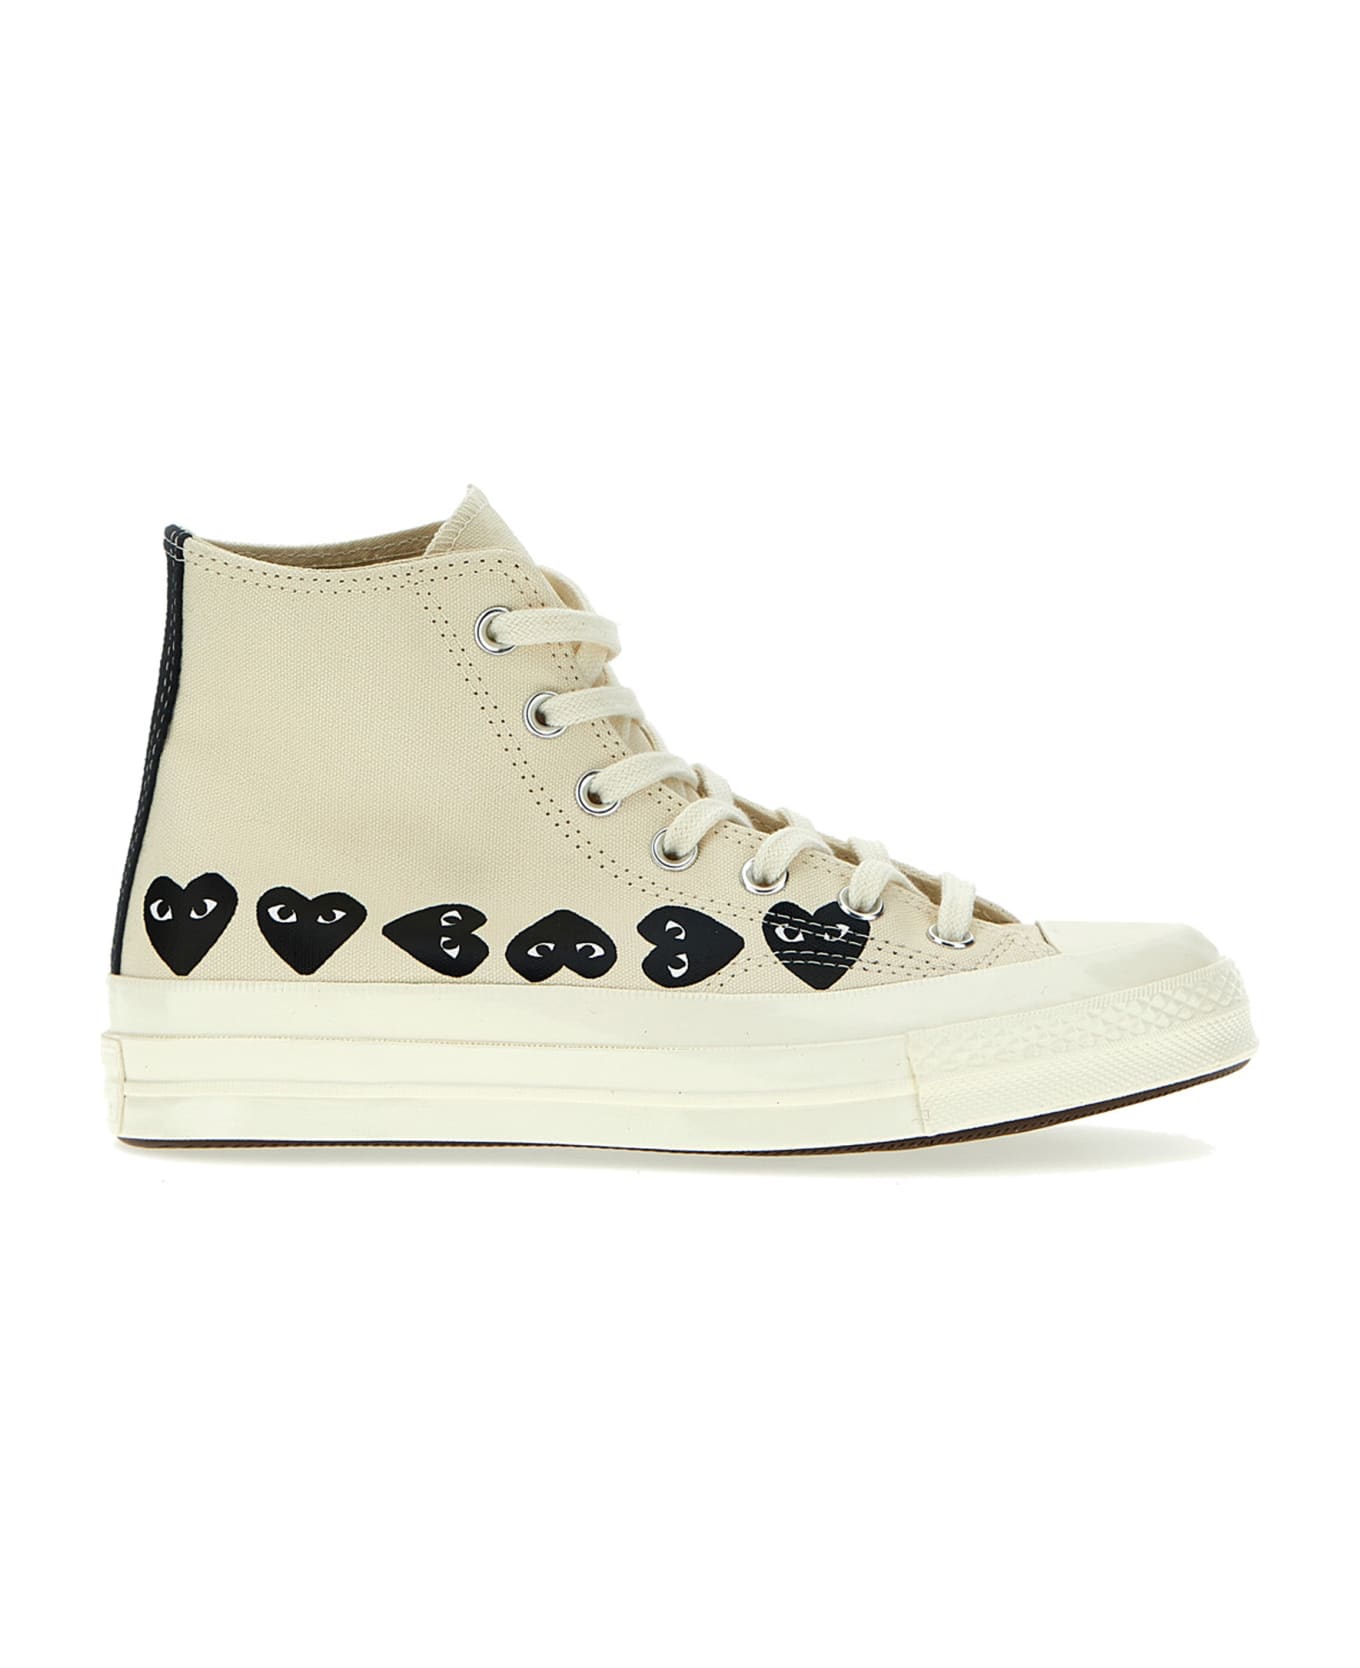 Comme des Garçons Play X Converse Sneakers - White/Black スニーカー